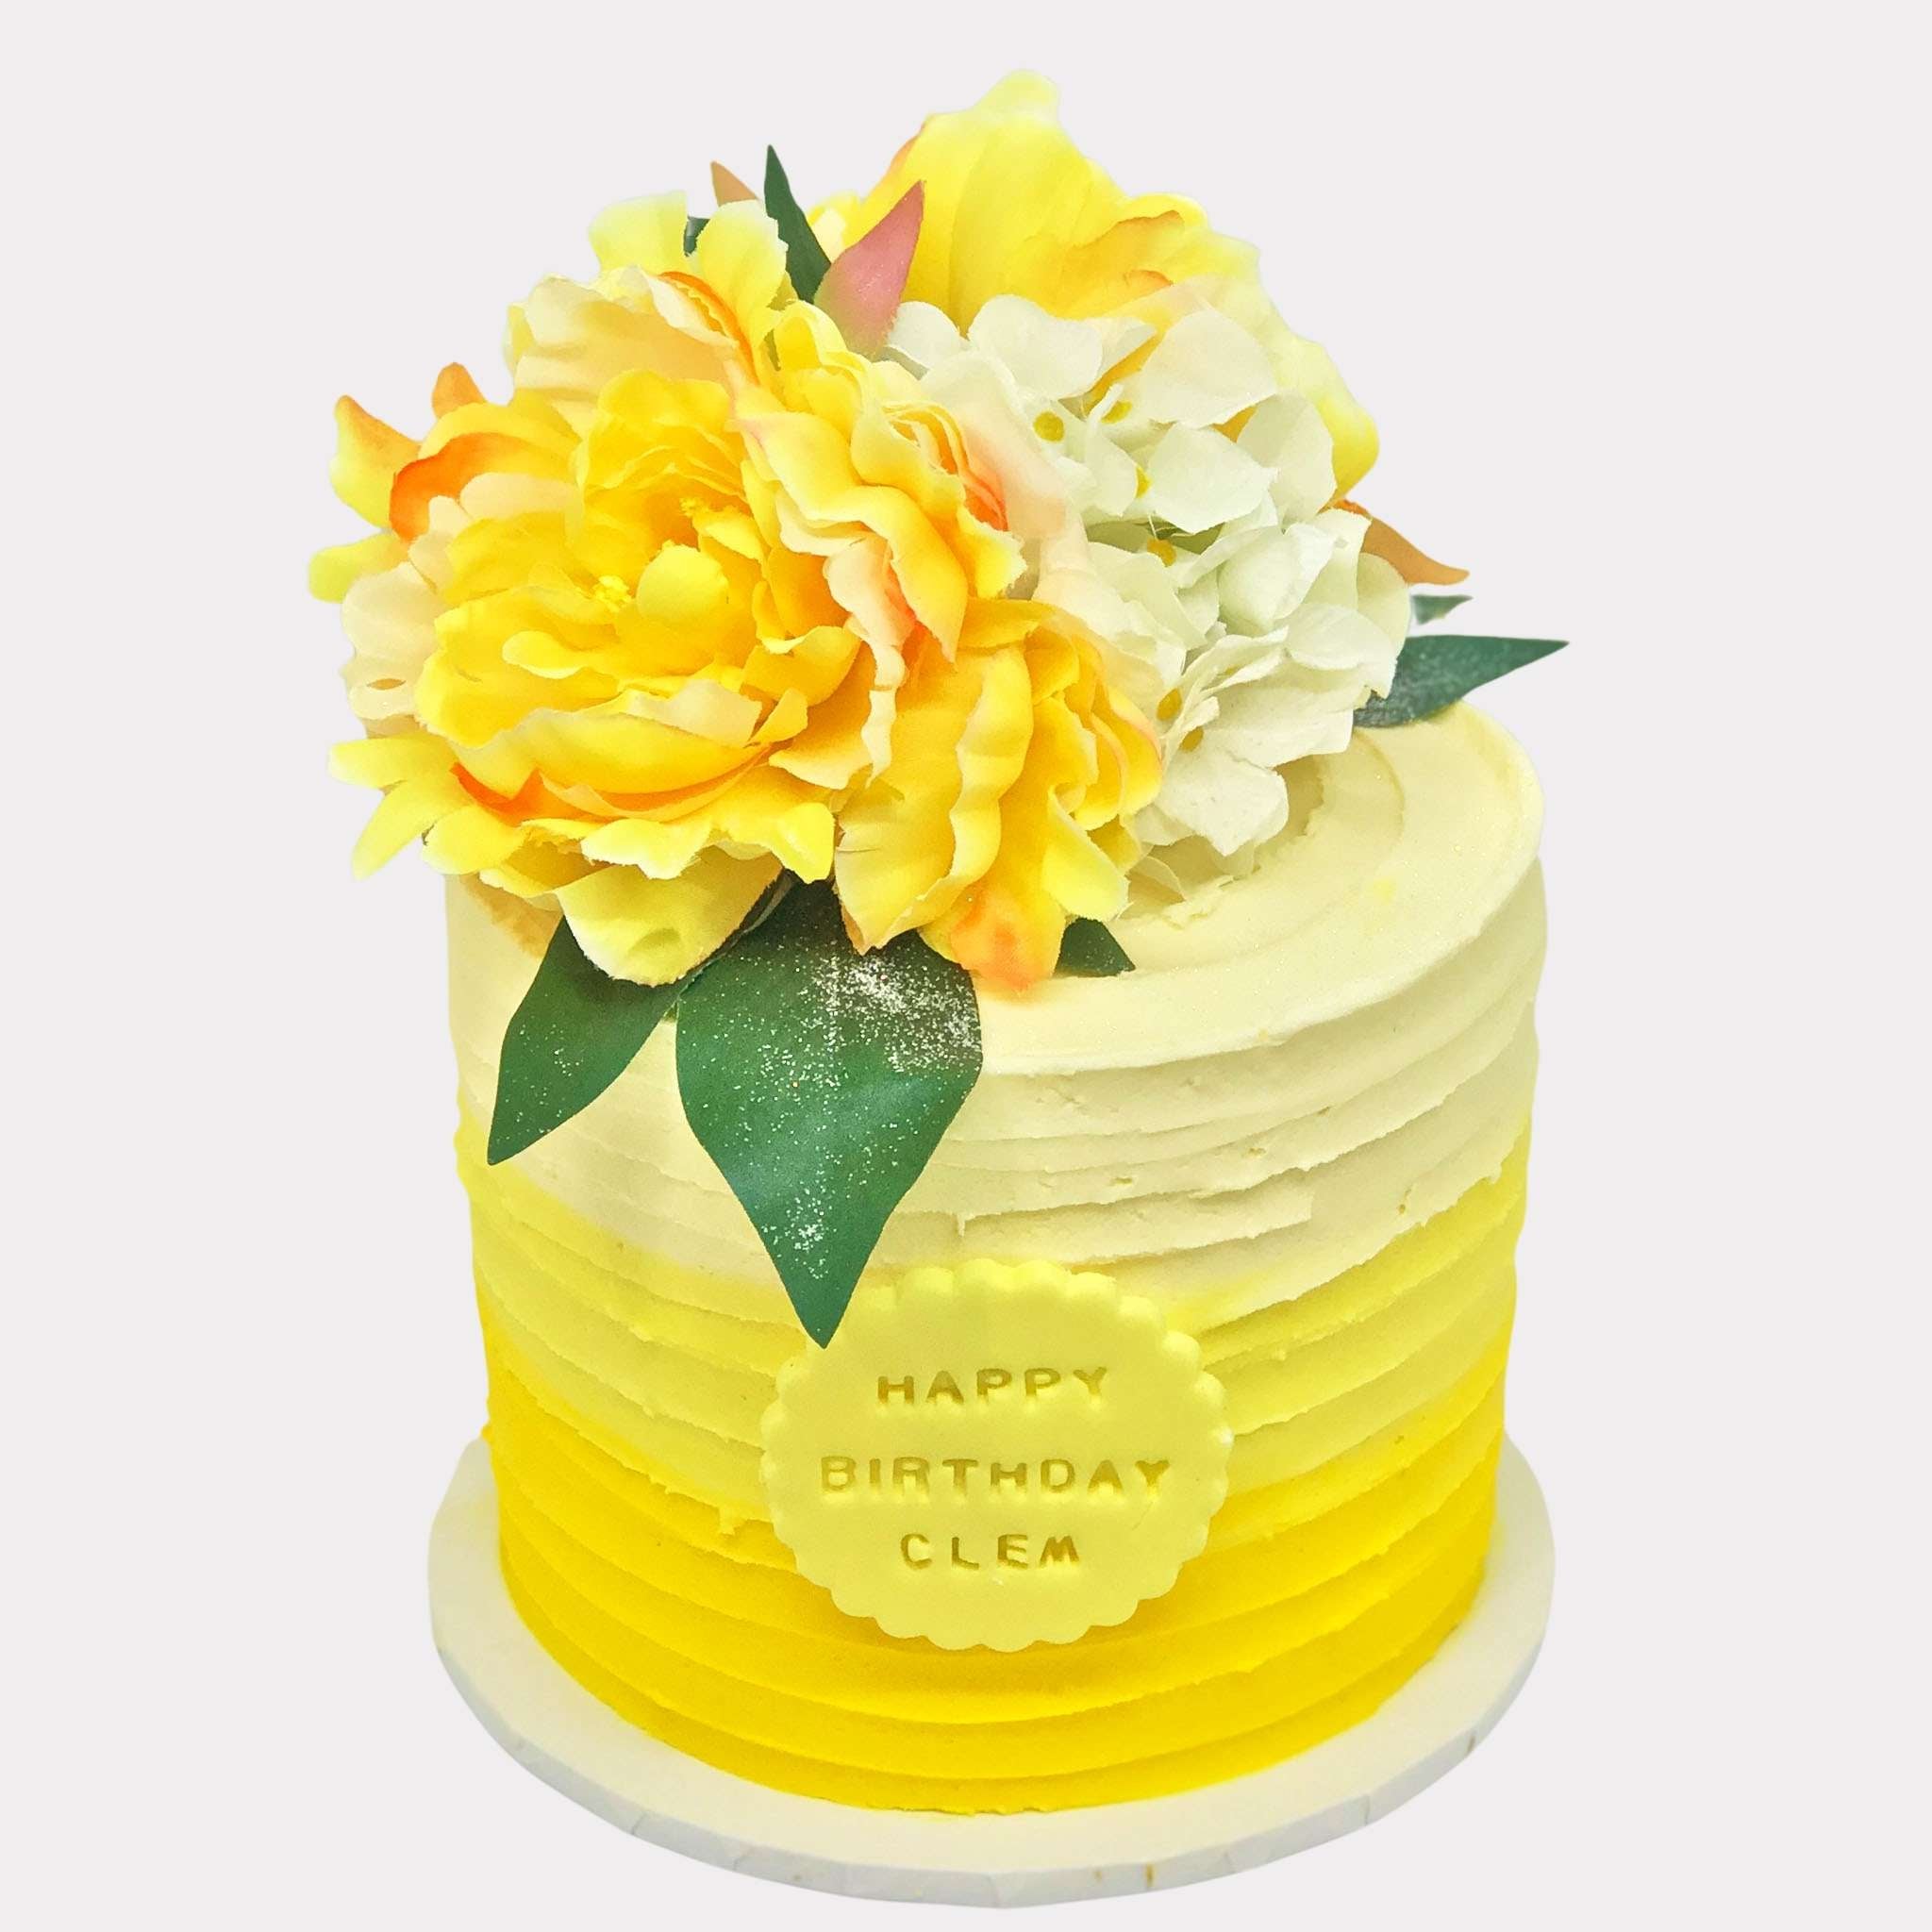 Balloon confetti yellow color theme swirls buttercream birthday cake  #singaporecake #yellowcake #balloonconfetticake #buttercreamcake # birthdaycake #creamcake #childrencake | The Sensational Cakes